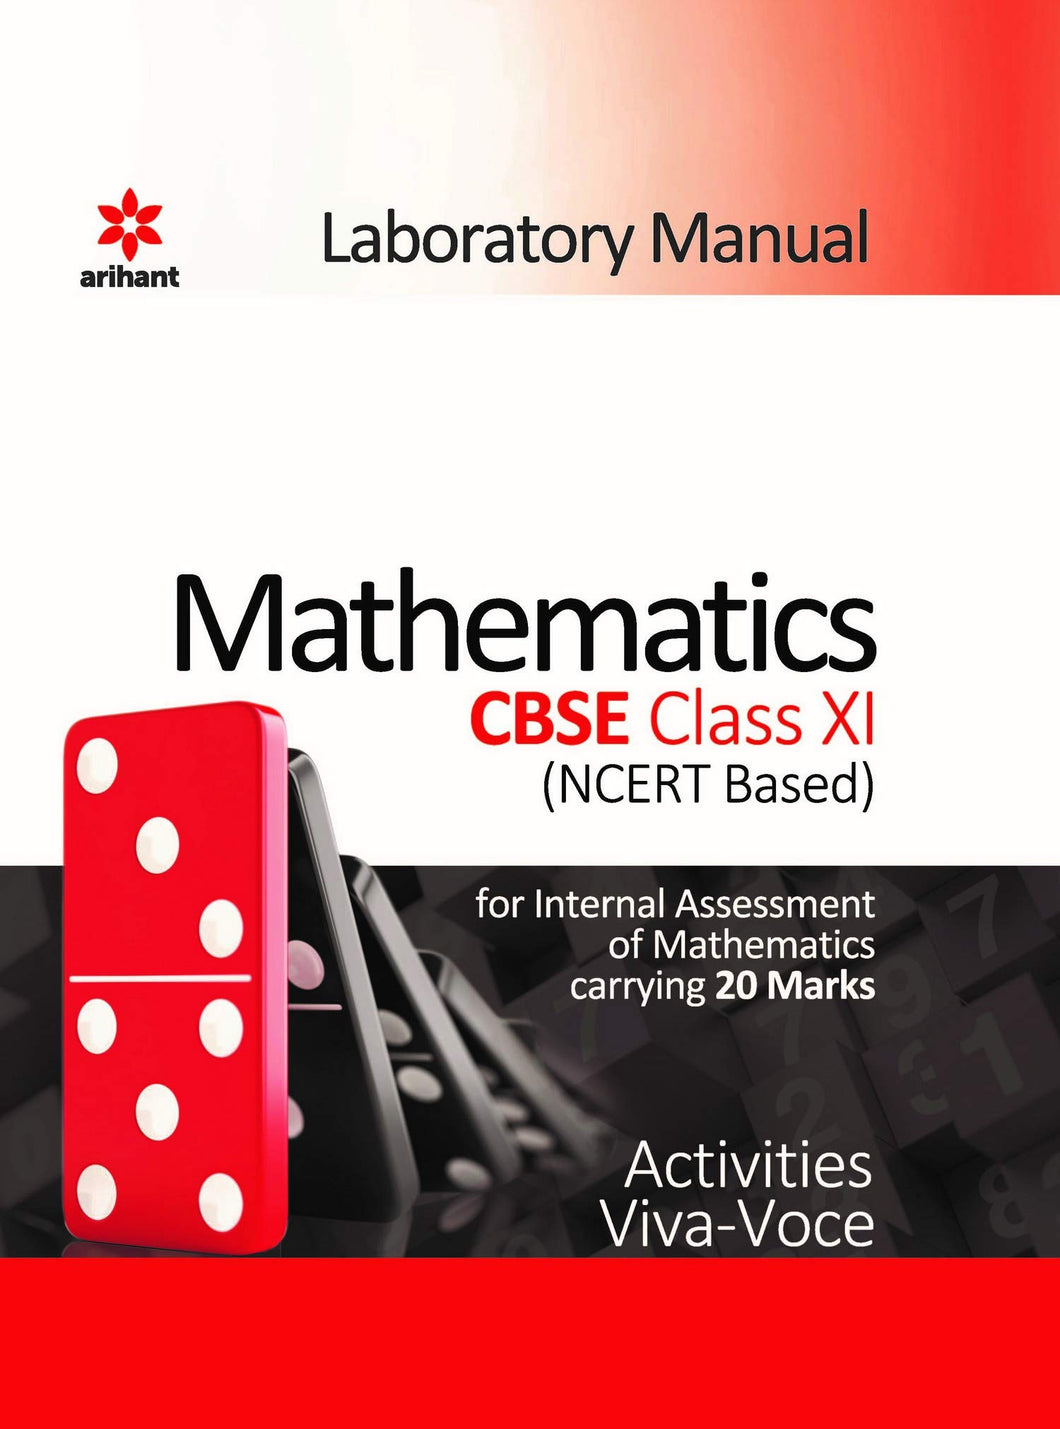 Arihant Laboratory Manual Mathematics CBSE Class 11